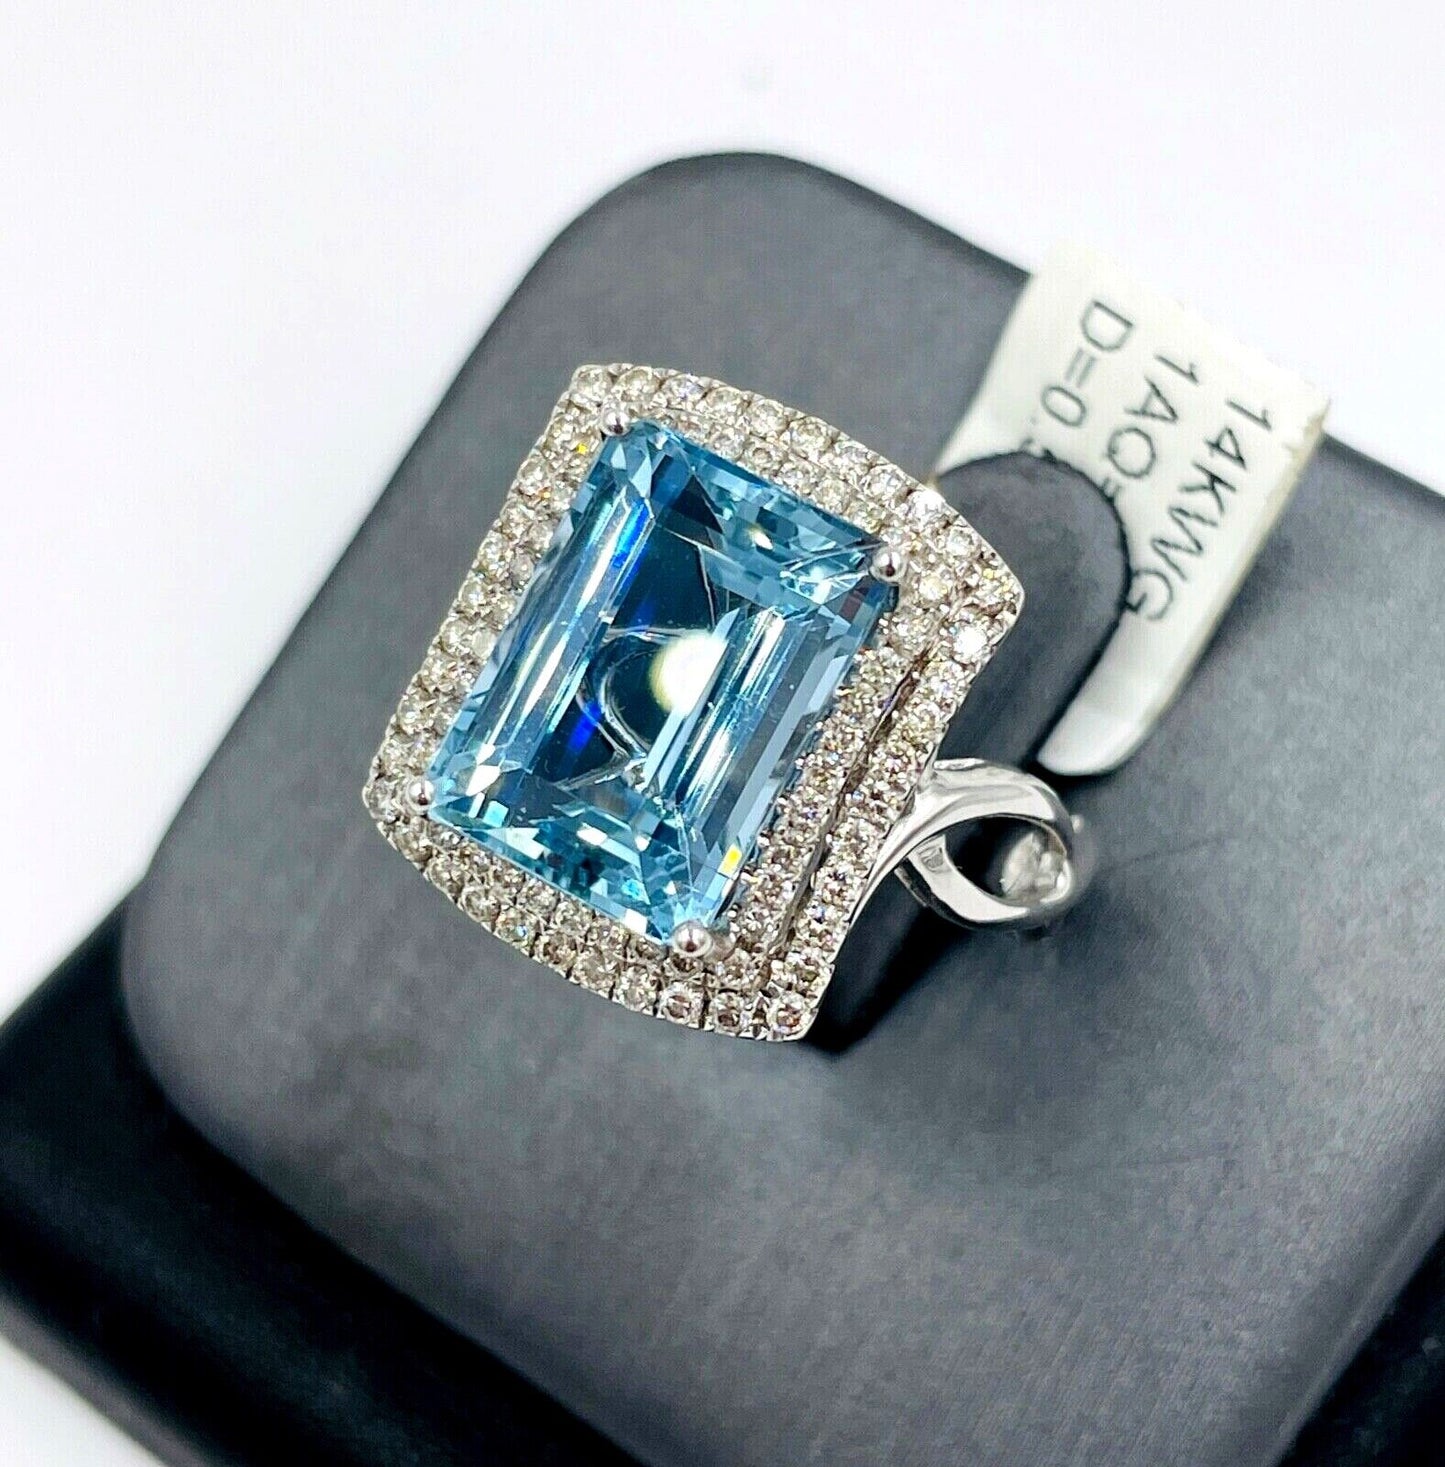 Stunning 5.94ct Aquamarine with diamond double halo Cocktail ring